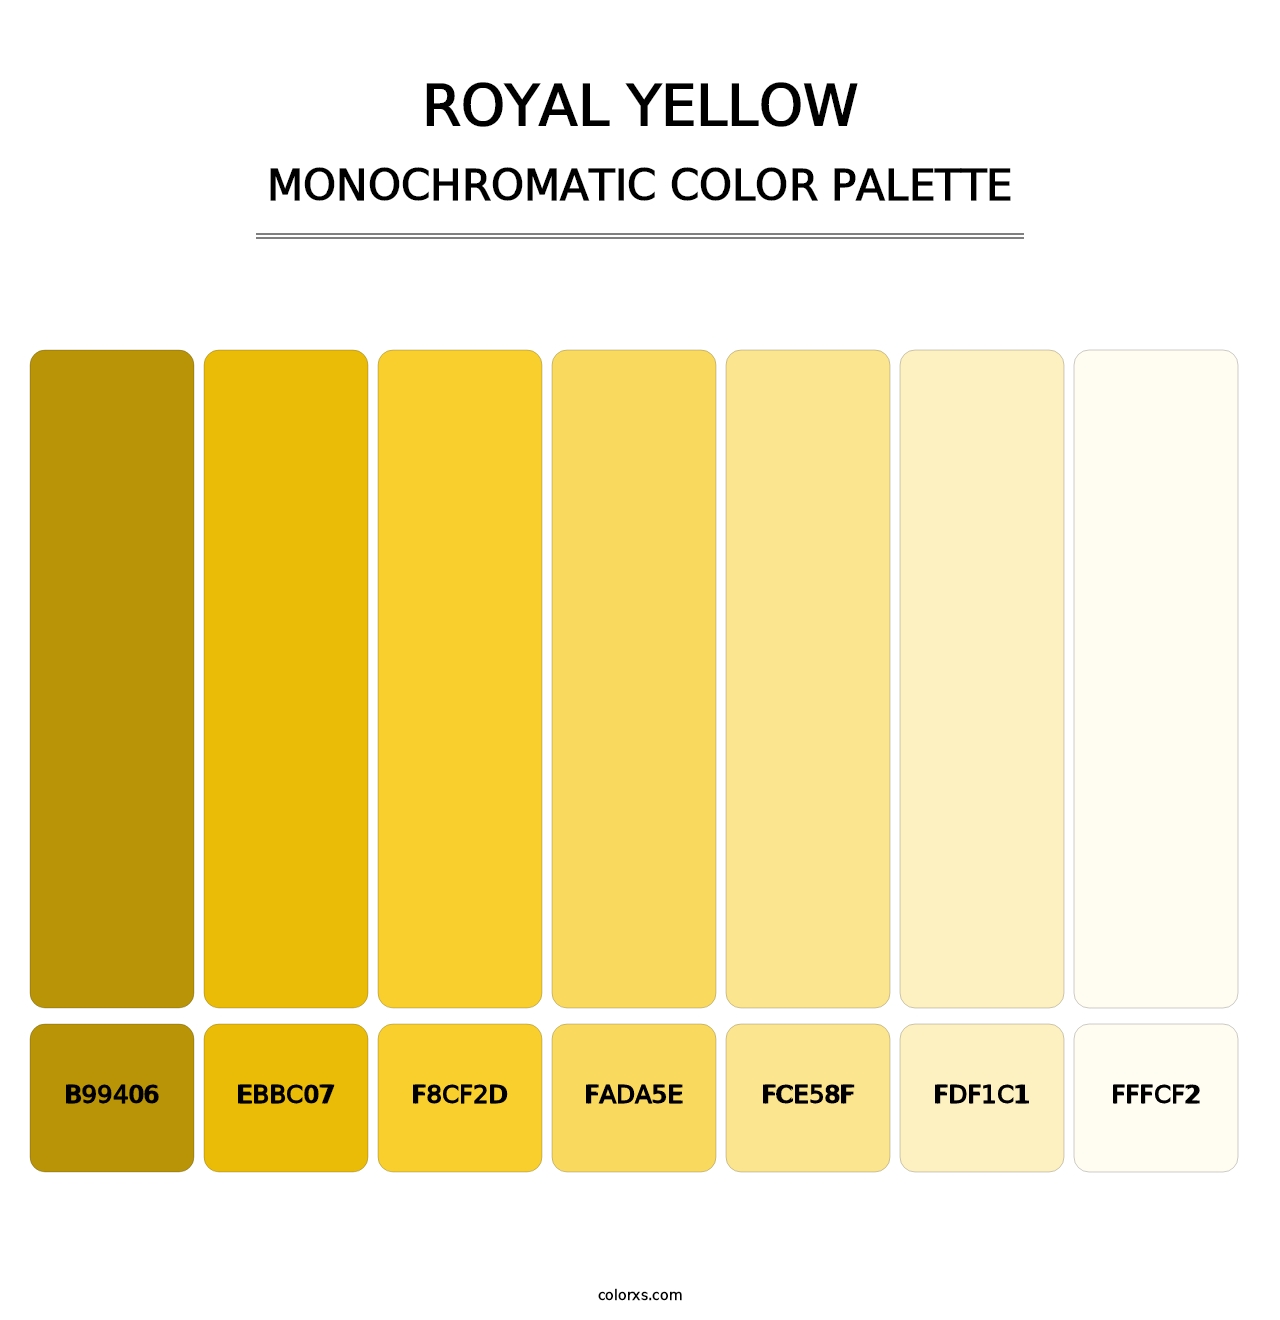 Royal Yellow - Monochromatic Color Palette